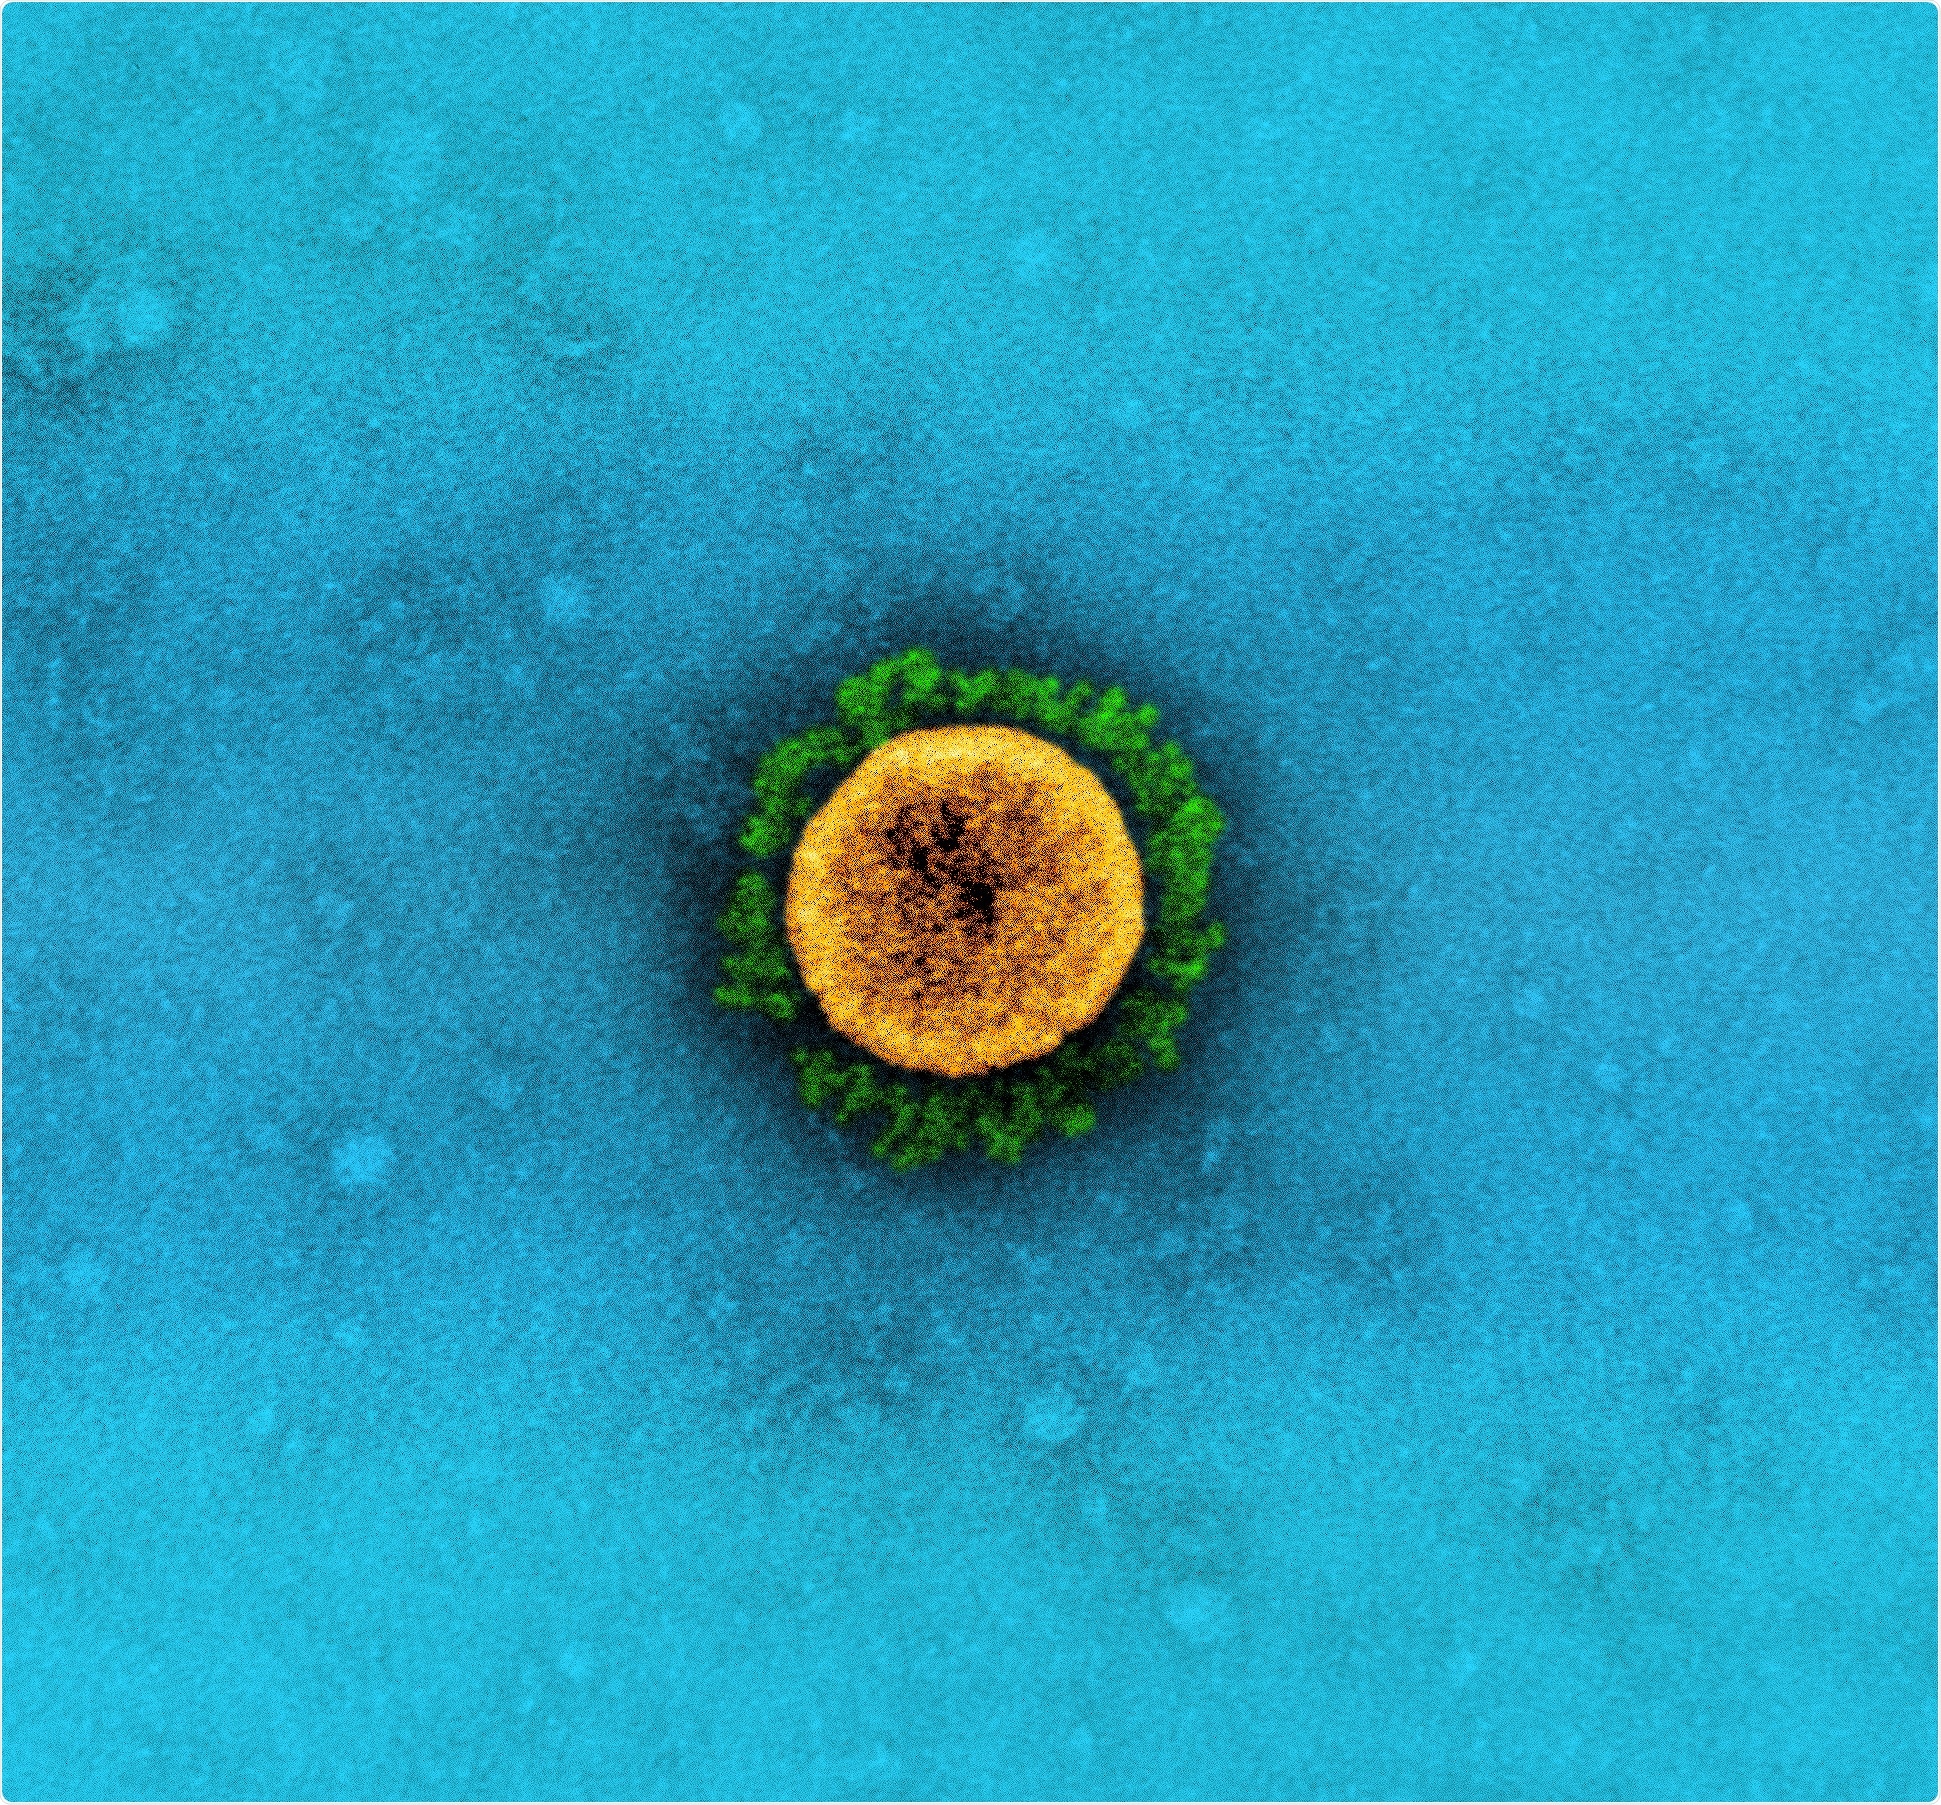 Study: SARS-CoV-2 hijacks folate and one-carbon metabolism for viral replication. Image Credit: NIAID